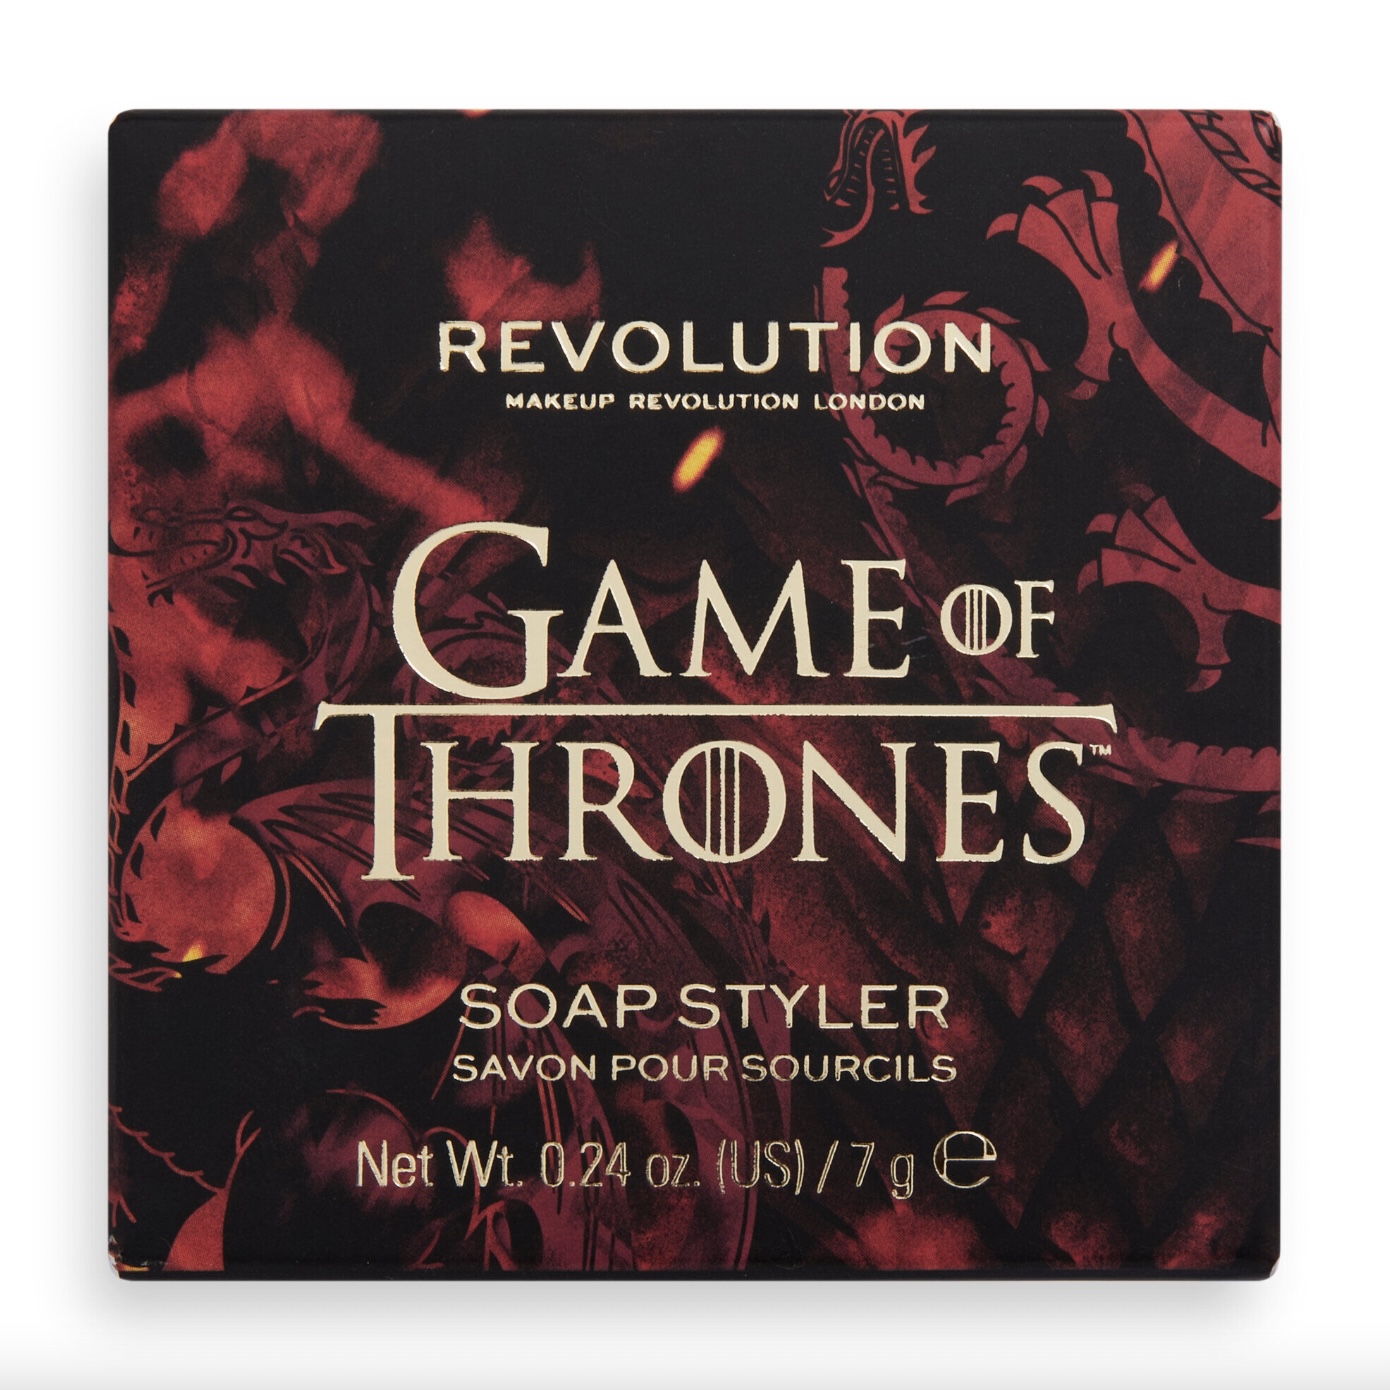 Revolution X Game of Thrones Soap Styler